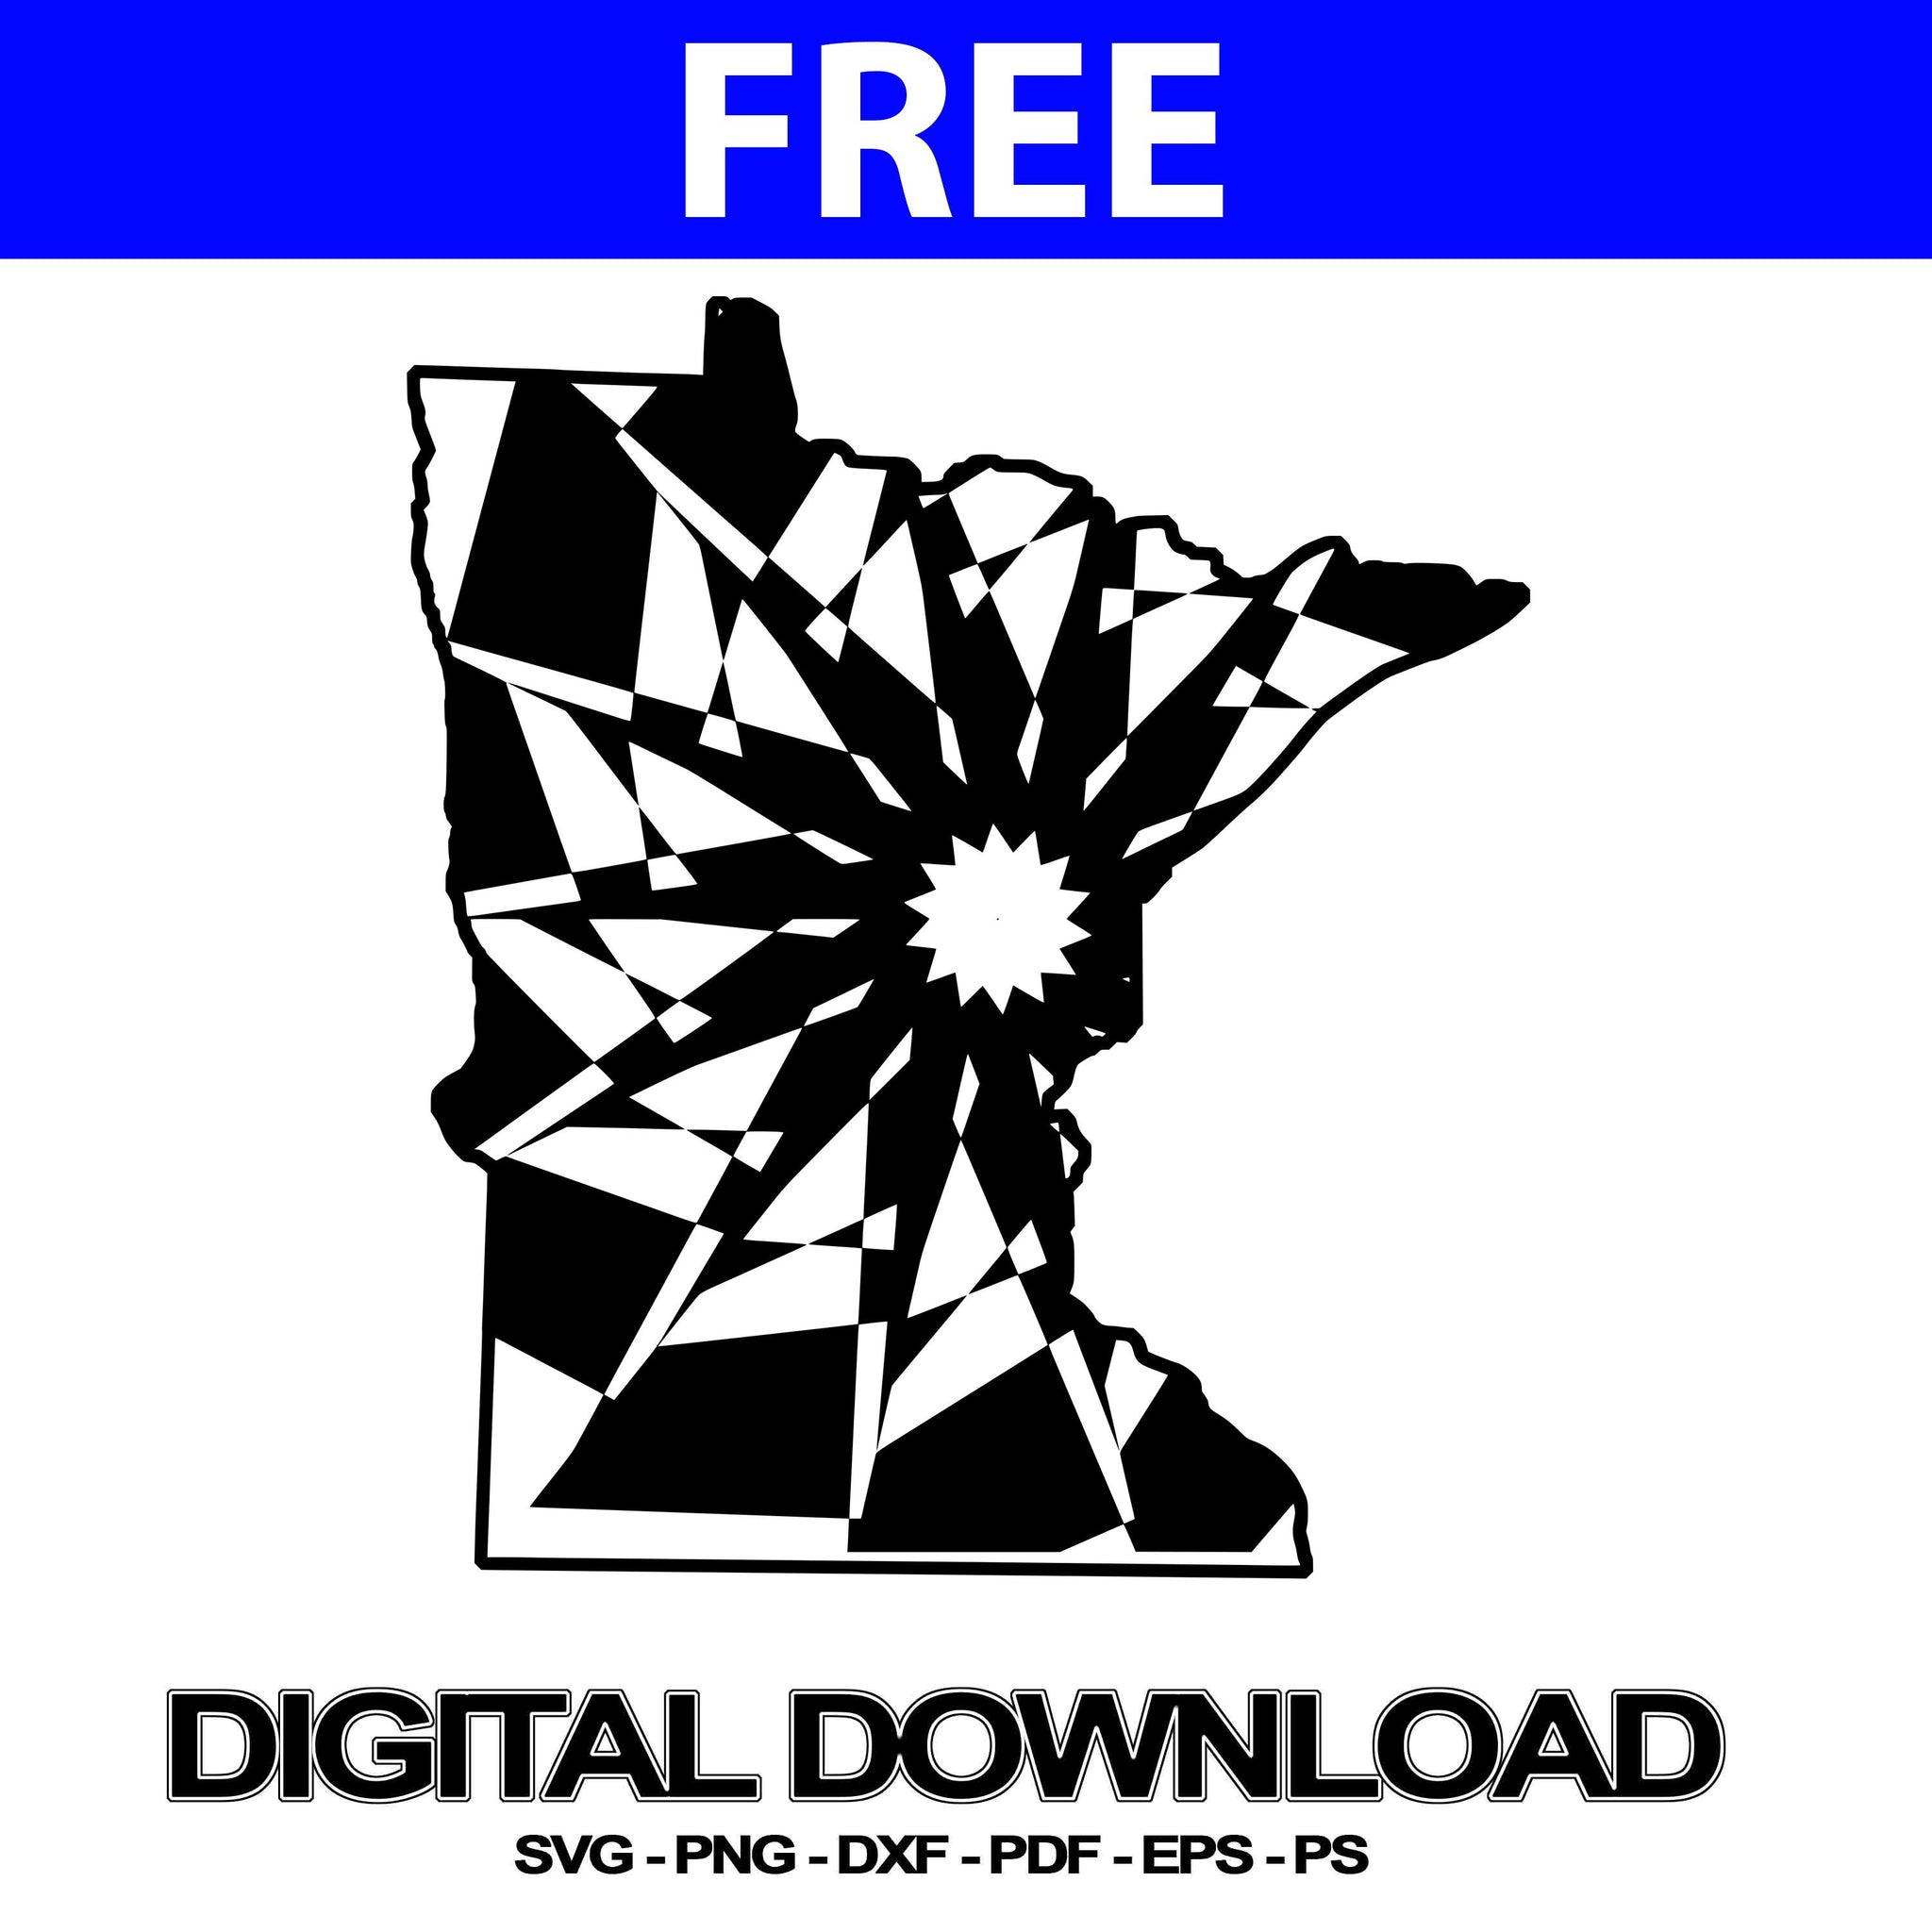 Free Free 174 Minnesota Svg Free SVG PNG EPS DXF File